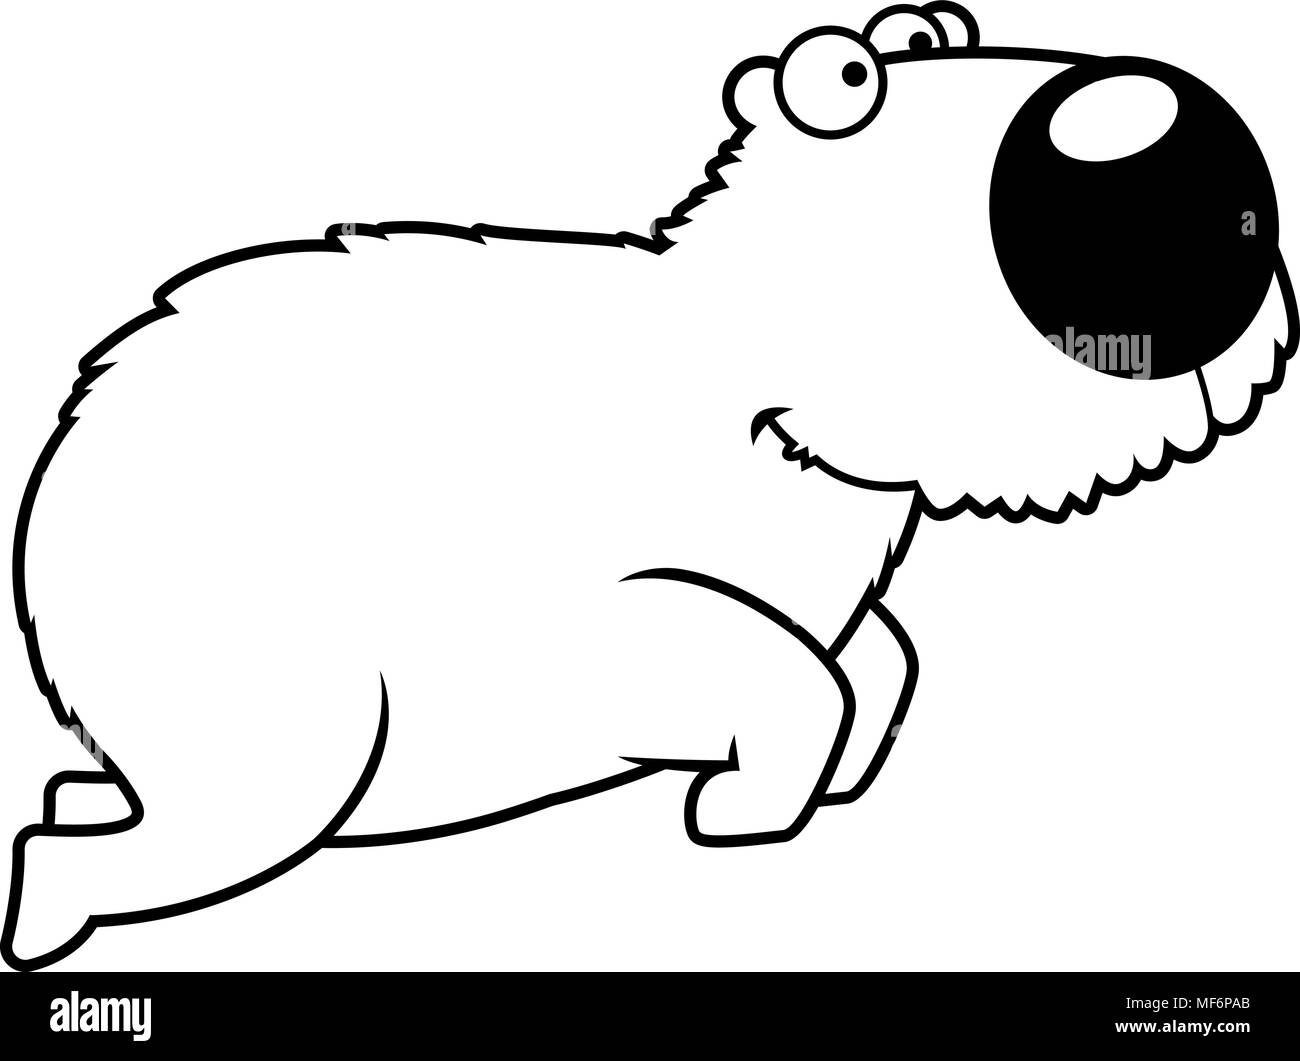 A cartoon illustration of a capybara jumping. Stock Vector